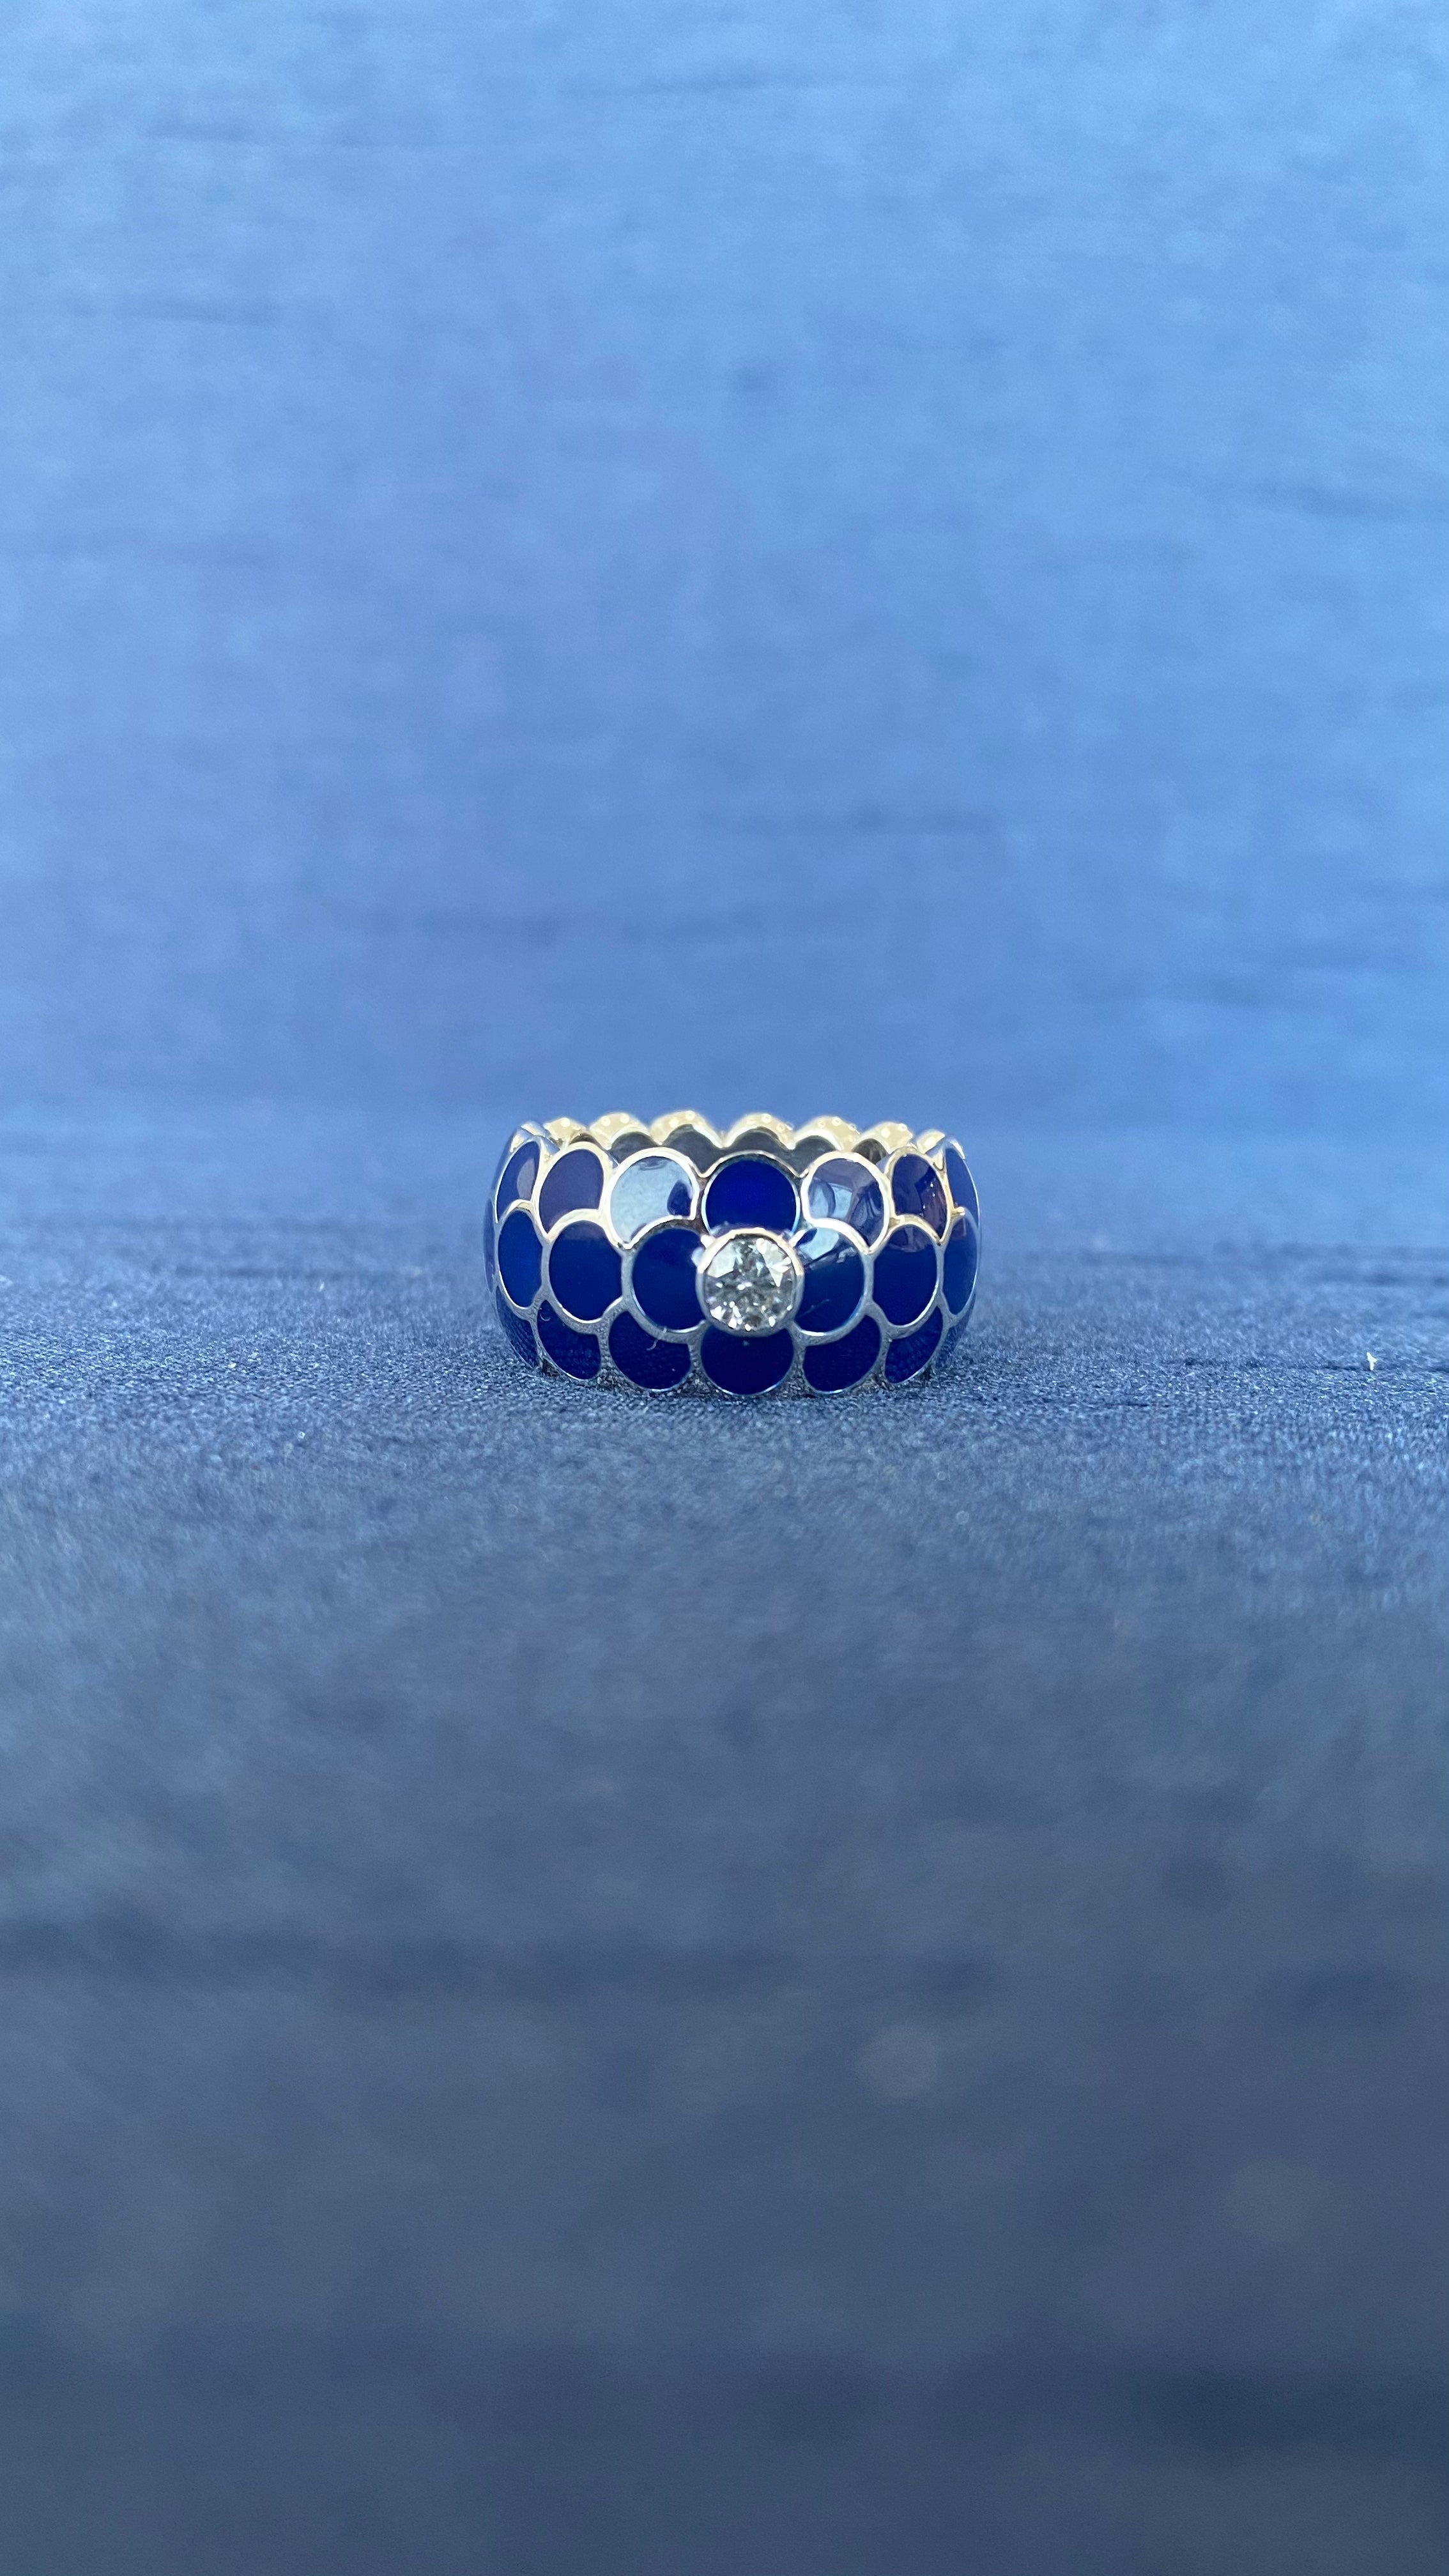 Design Enamel Rings with Round Diamonds